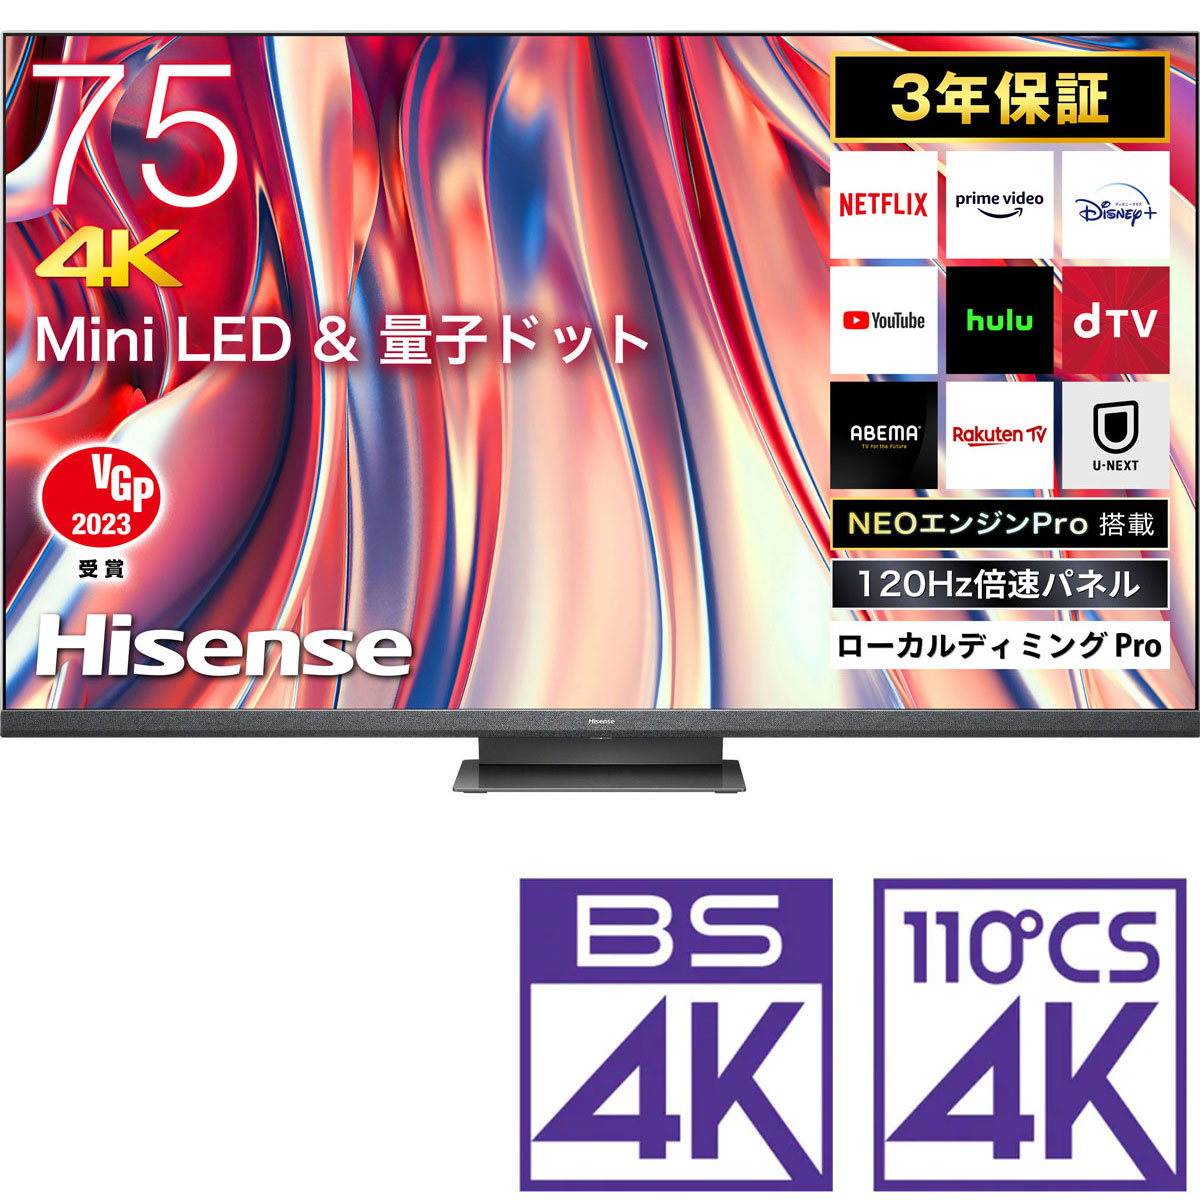 Hisense ハイセンス U7Hシリーズ 4K液晶テレビ 4Kチューナー内蔵 43U7H